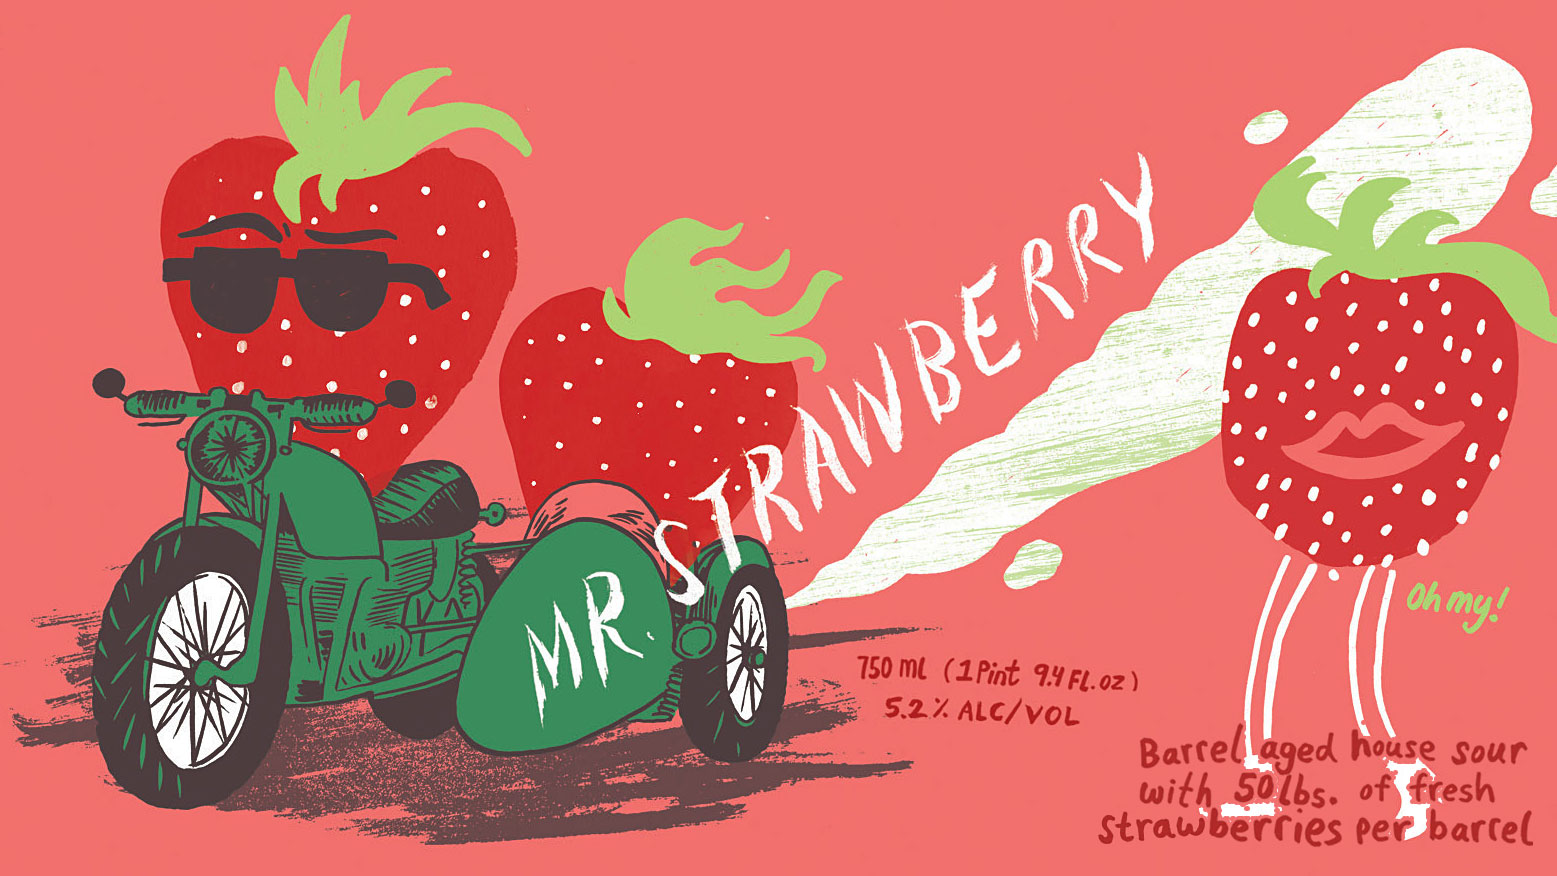 Mr Strawberry de Highway Manor